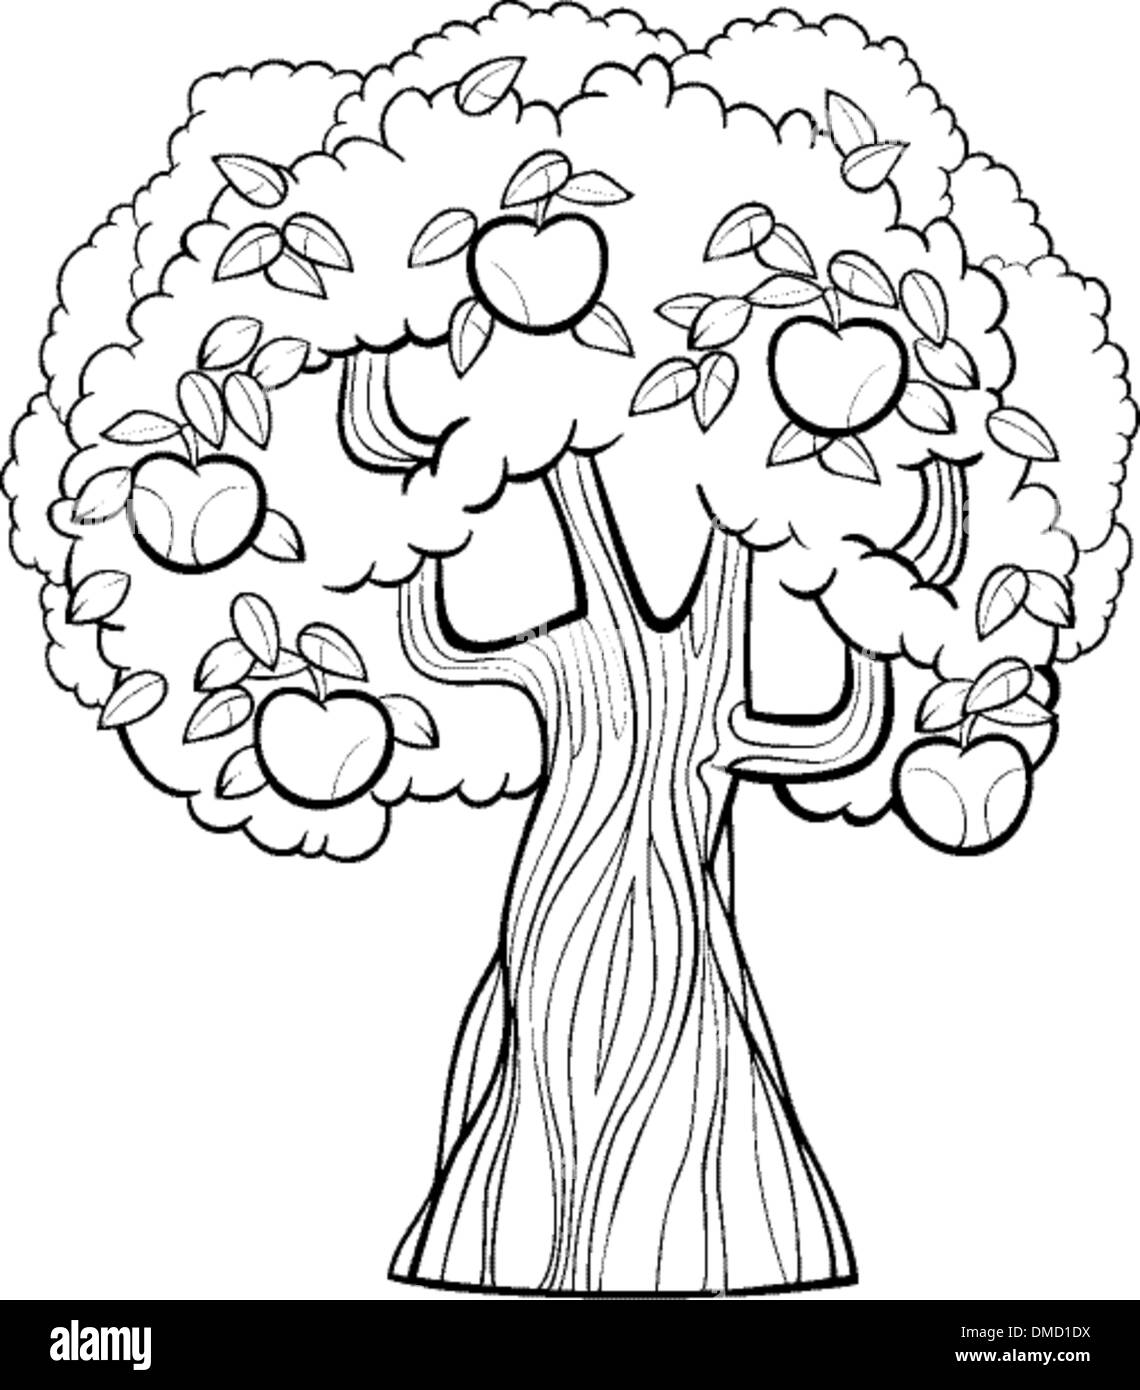 Apfel Baum Cartoon Fur Malbuch Stock Vektorgrafik Alamy